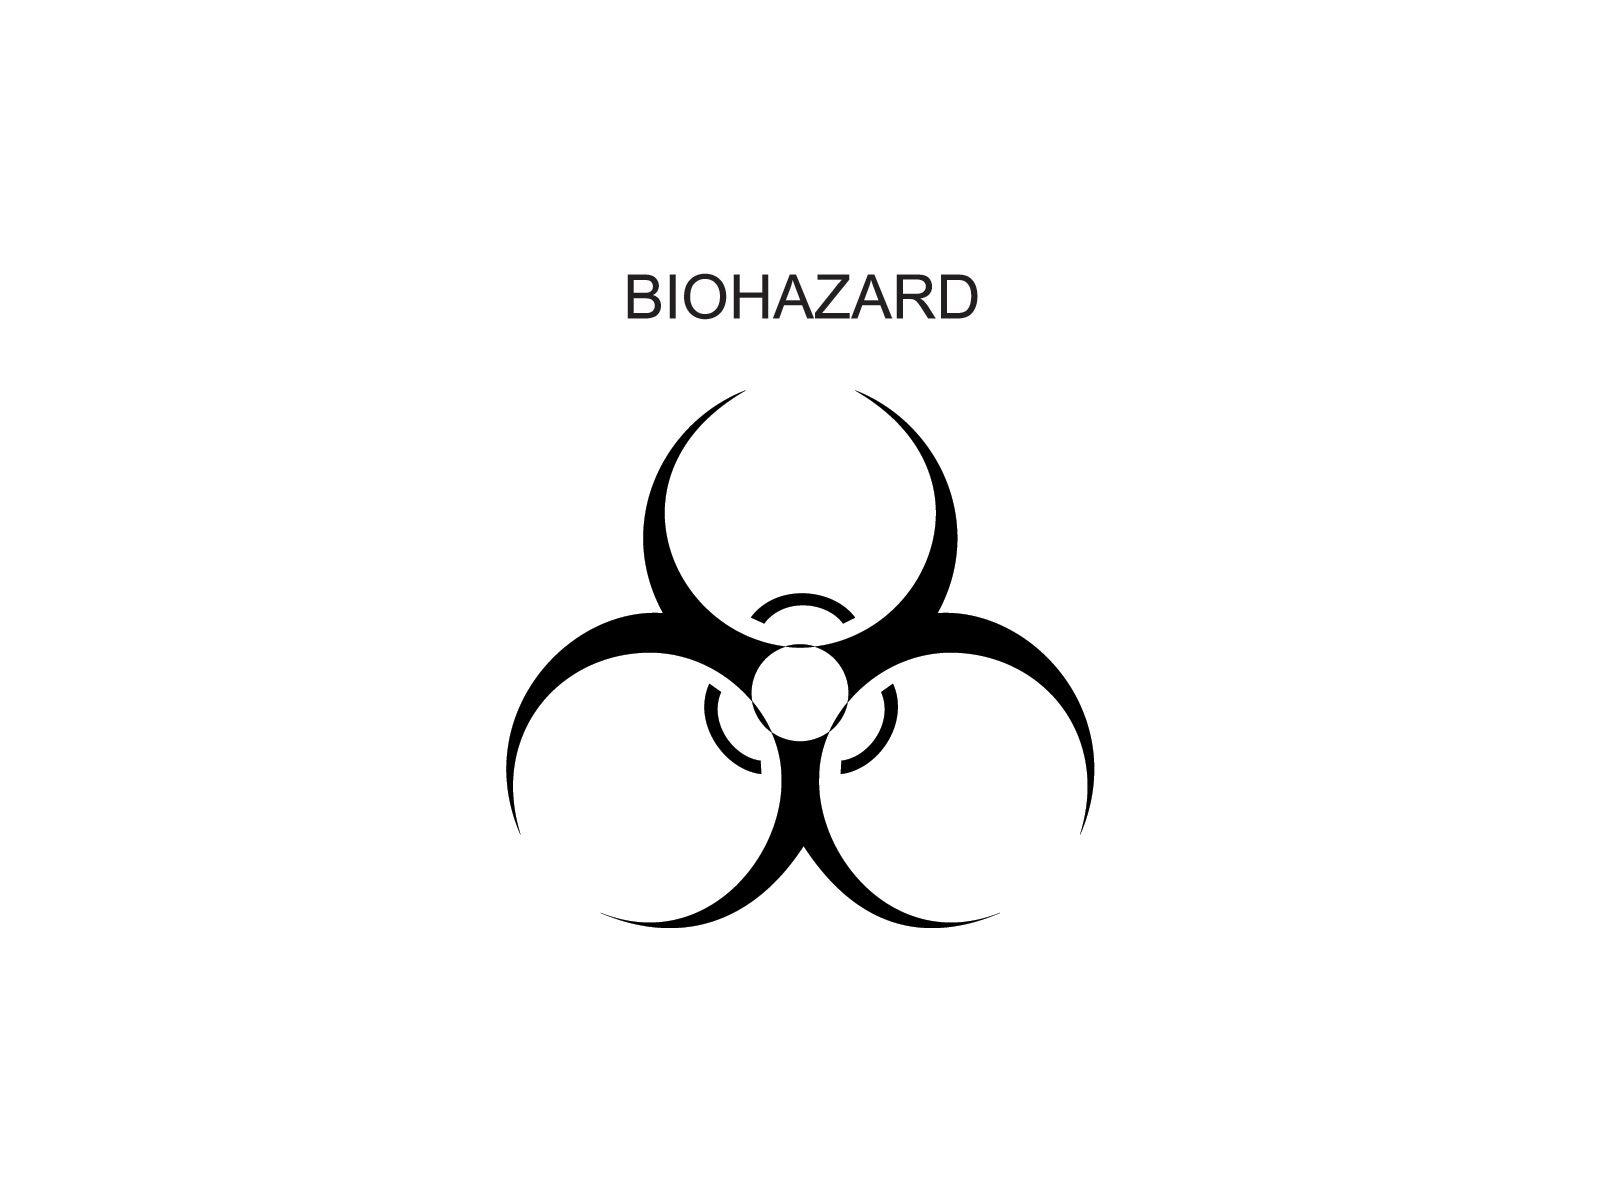 Rock and Metal Band Logo - Biohazard logo. Band logos band logos, metal bands logos